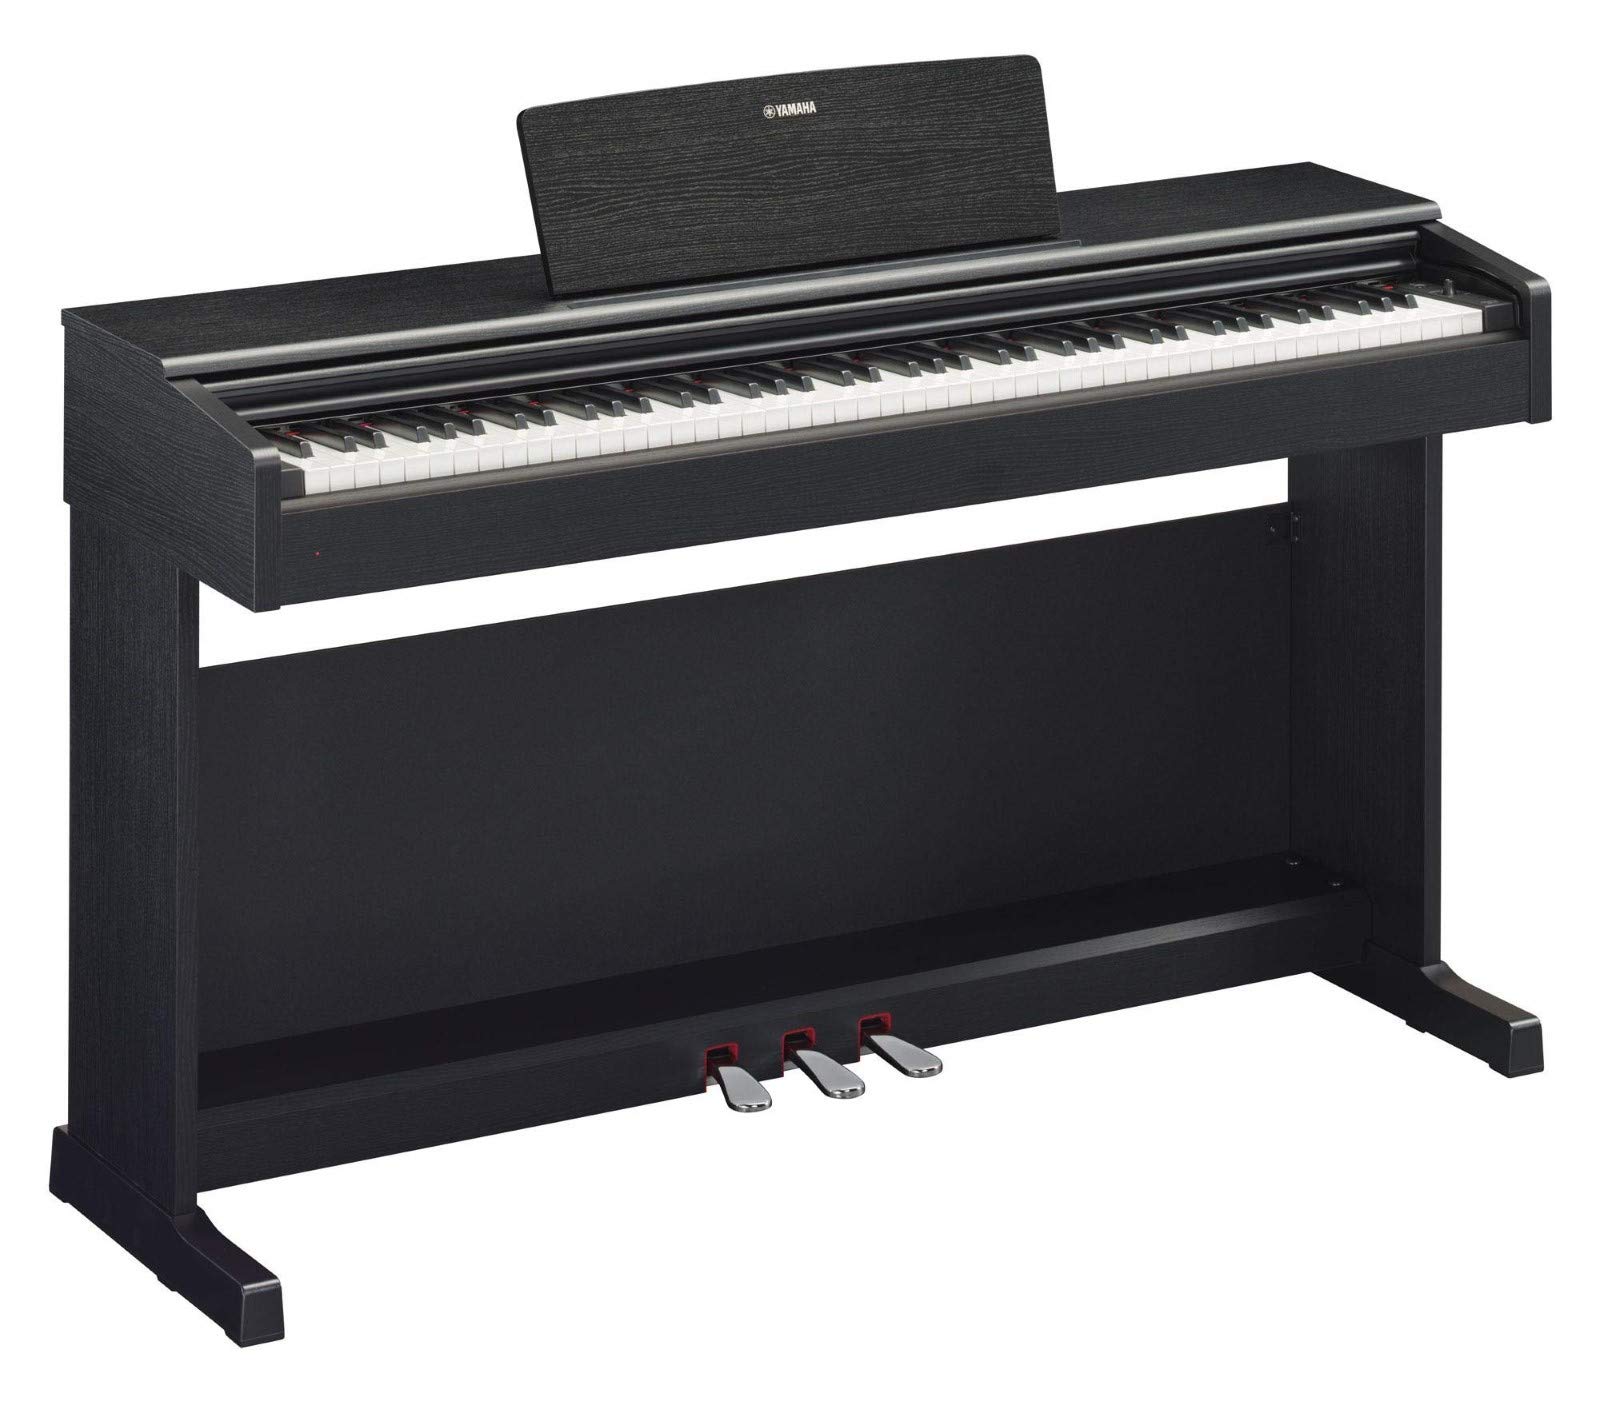 Yamaha Arius Digital Piano YDP-144B, schwarz – Elektronisches Klavier mit Hammermechanik, Konzertflügel-Klang & USB-to-Host-Anschluss – Kompatibel mit kostenloser App "Smart Pianist"